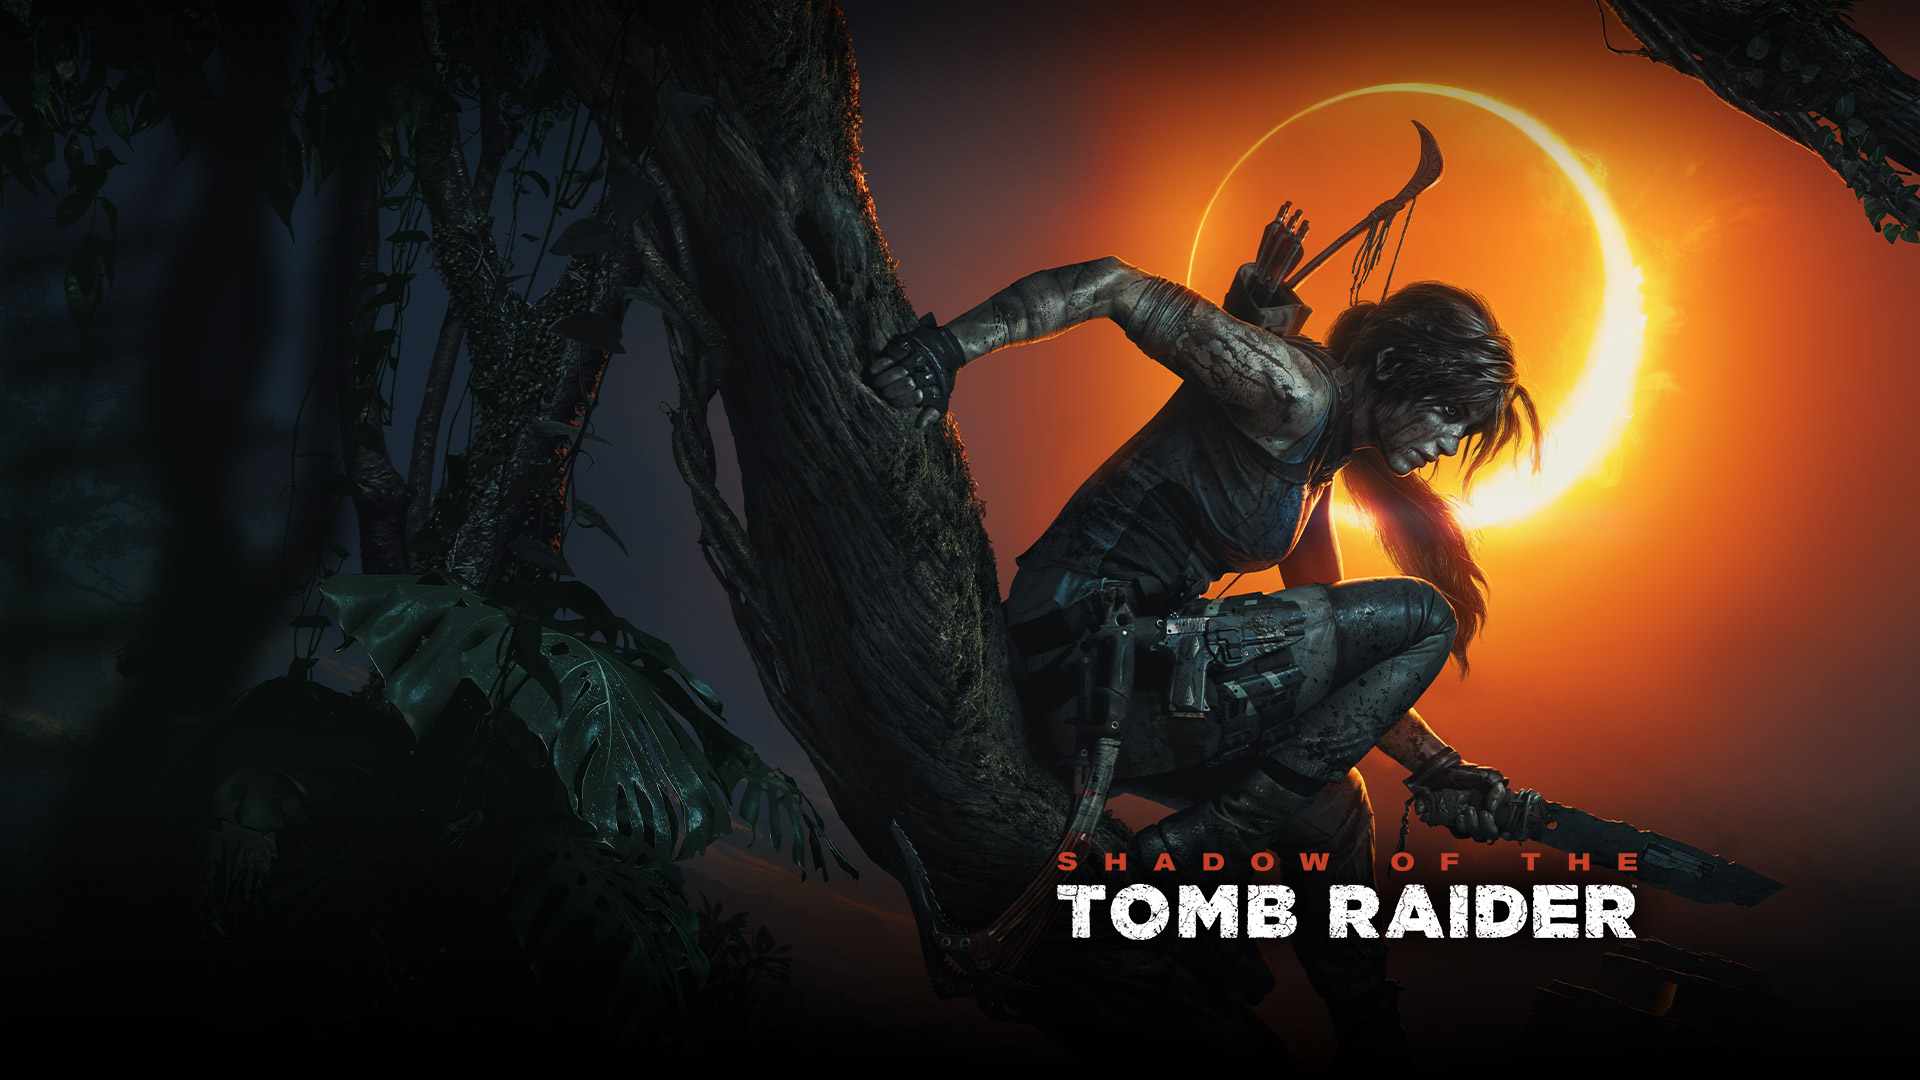 Shadow of the Tomb Raider, η Lara Croft κάθεται πάνω σε ένα κλαδί δέντρου κρατώντας ένα μαχαίρι, με έκλειψη ηλίου στο φόντο